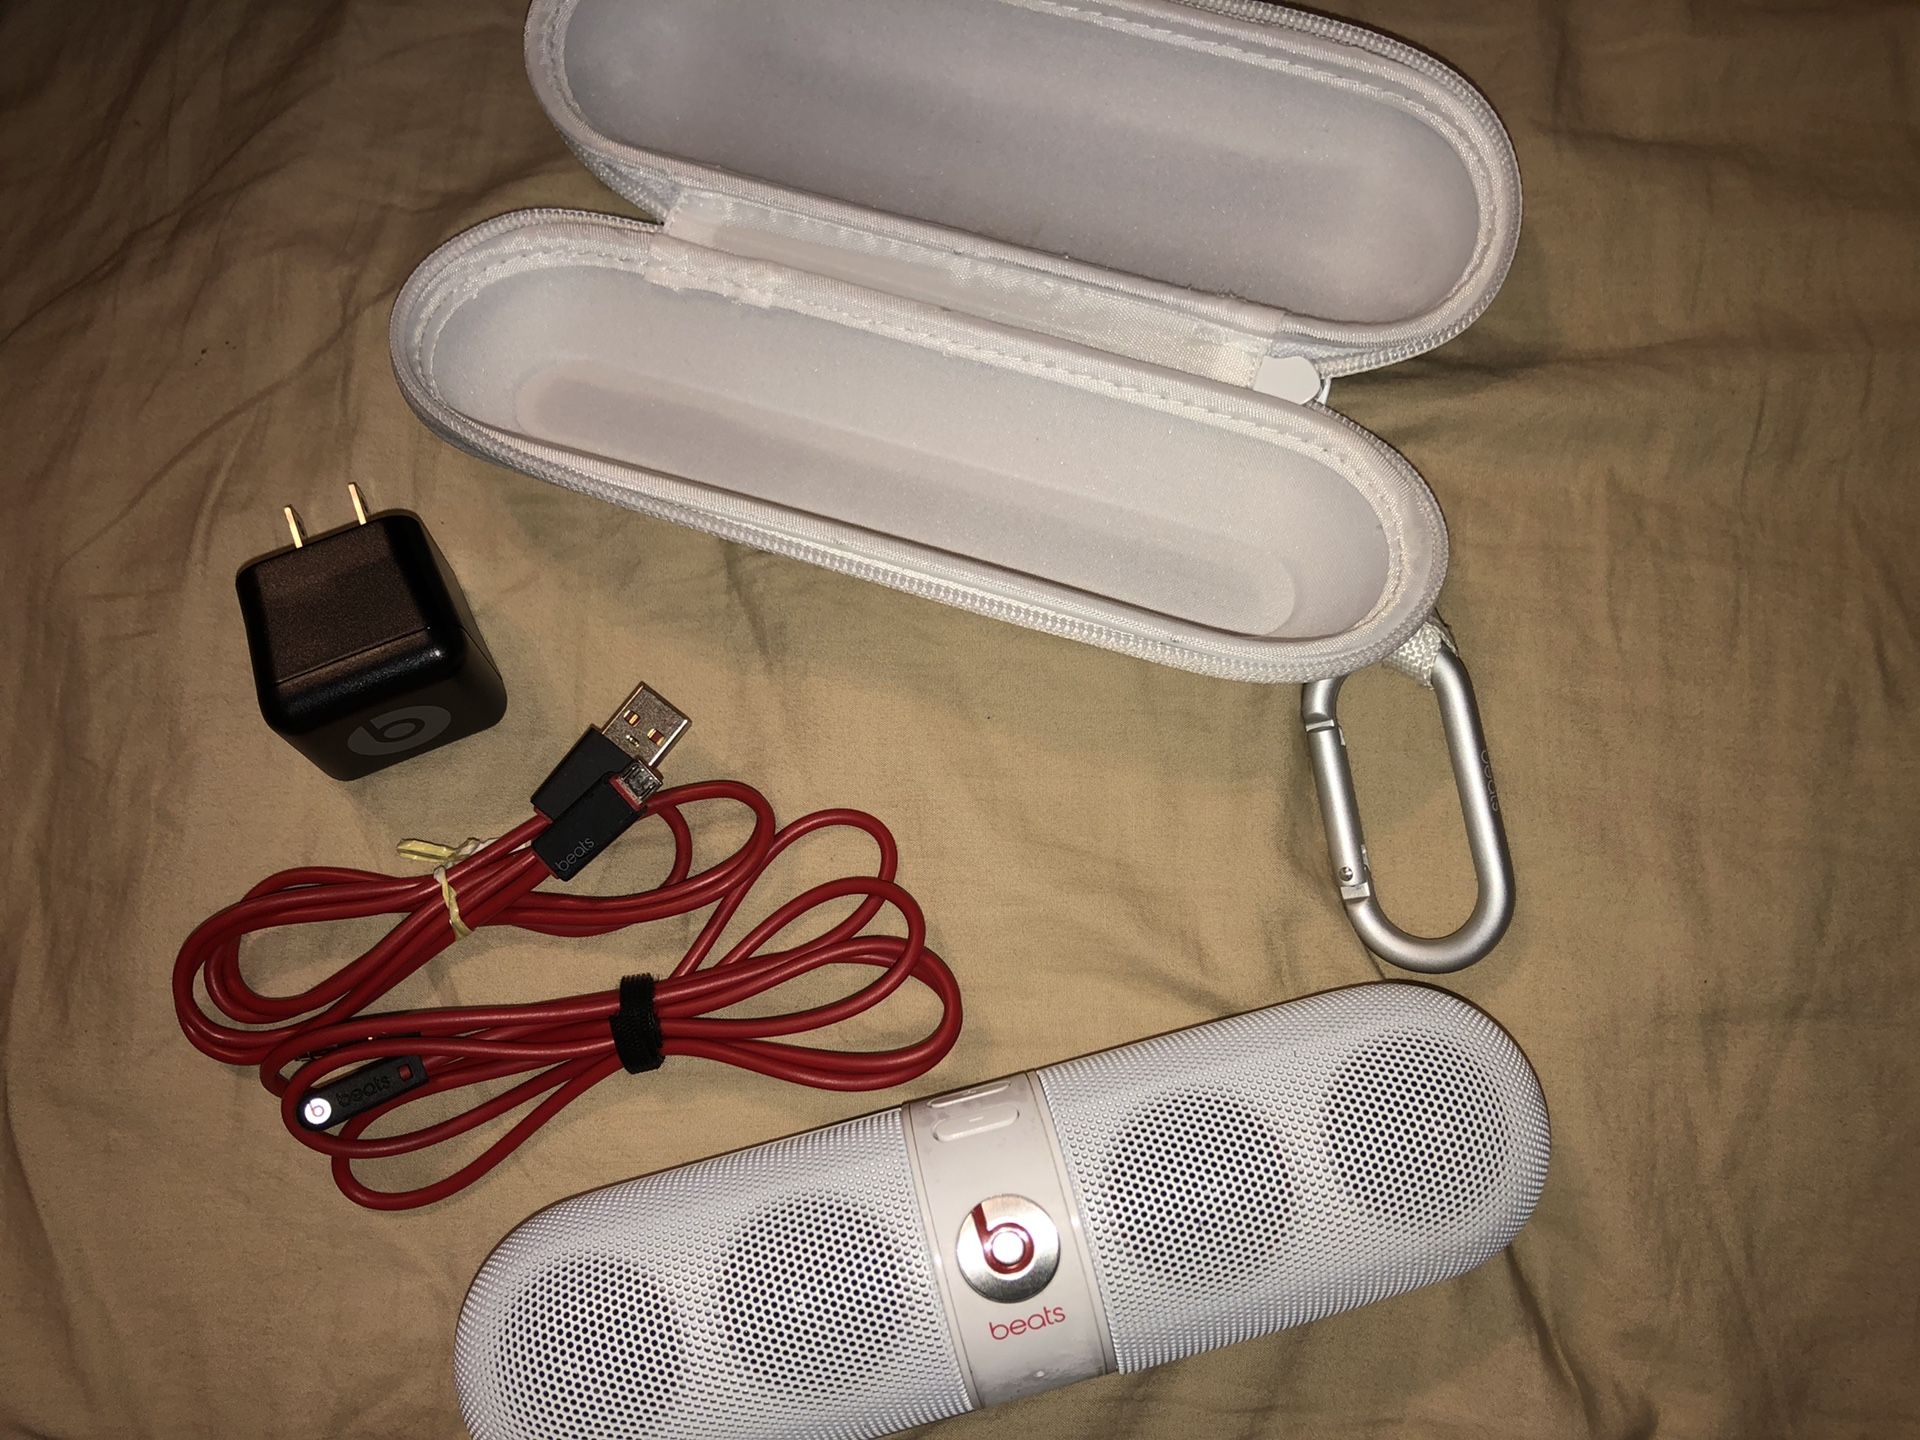 Portable beats pill speaker